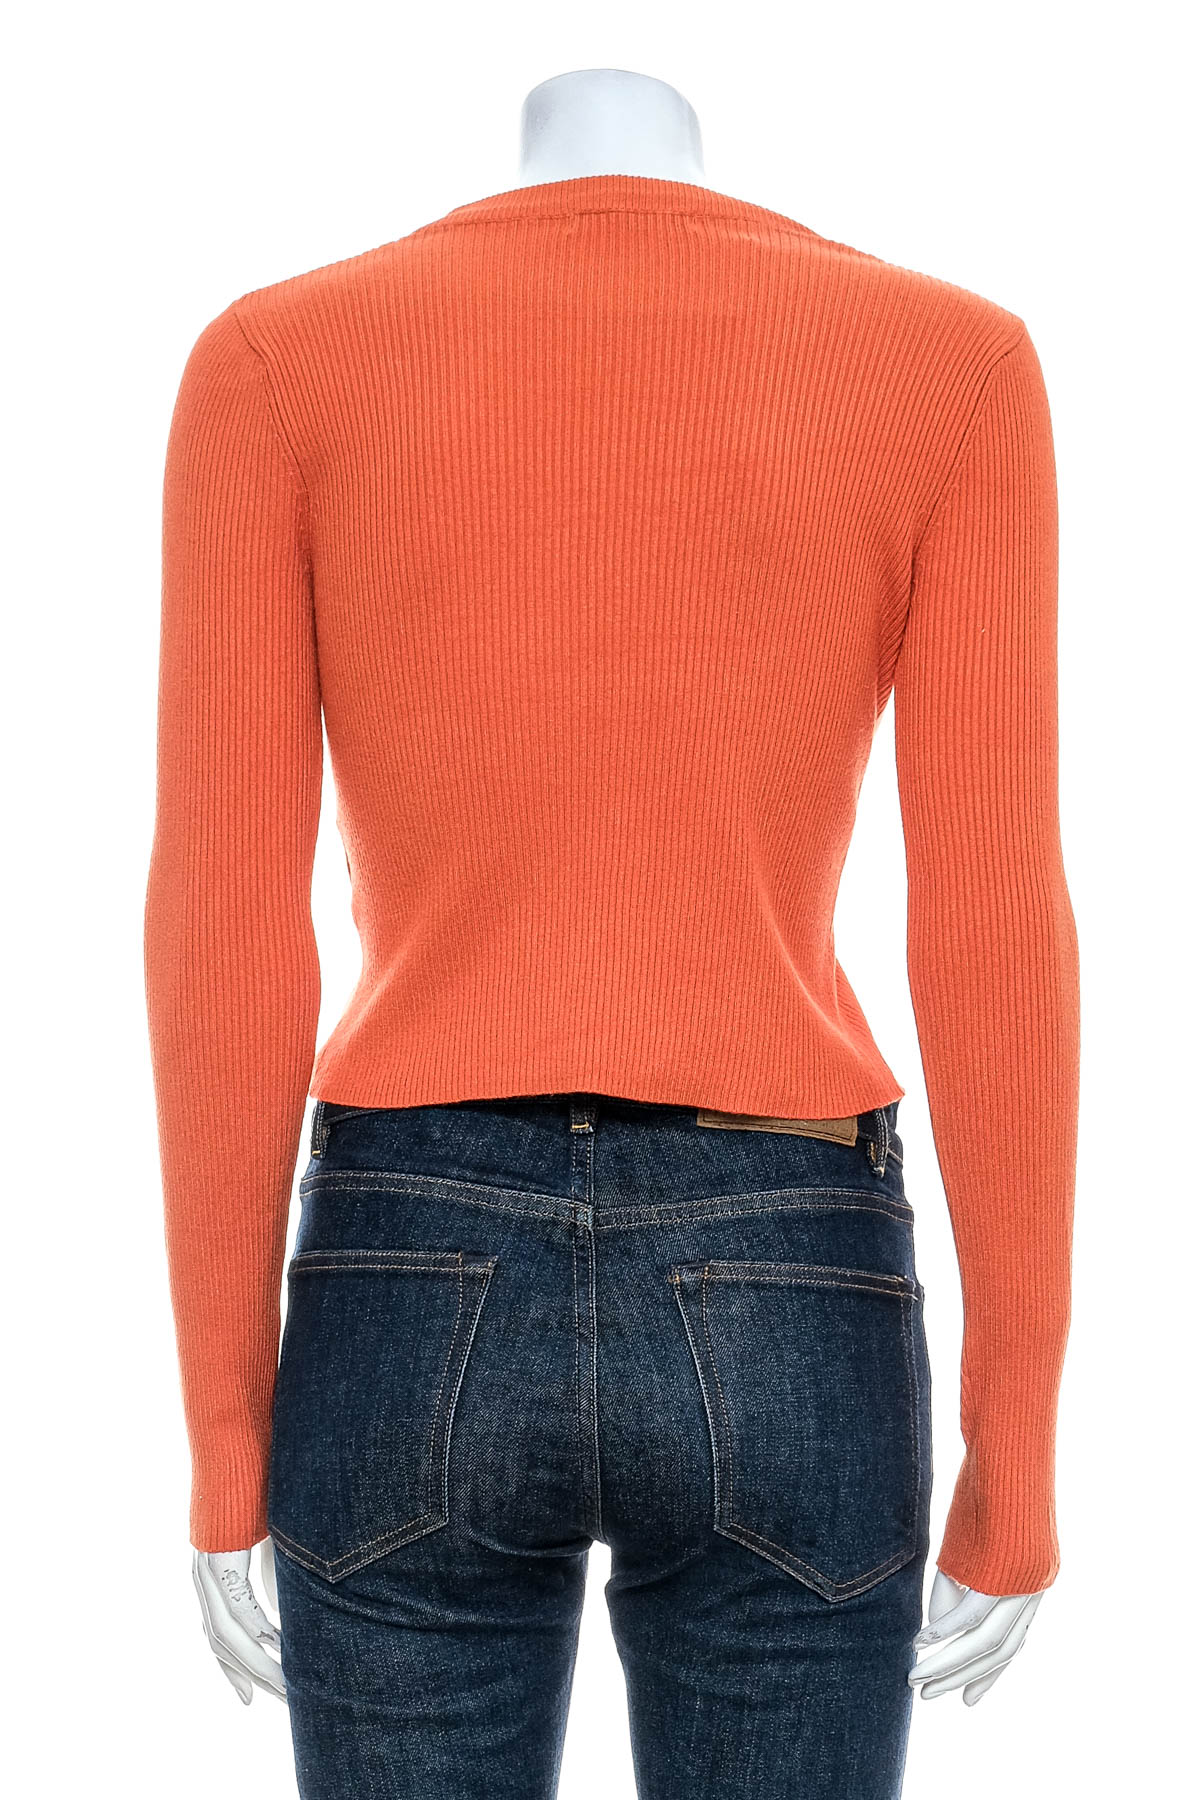 Women's sweater - Gina Tricot - 1